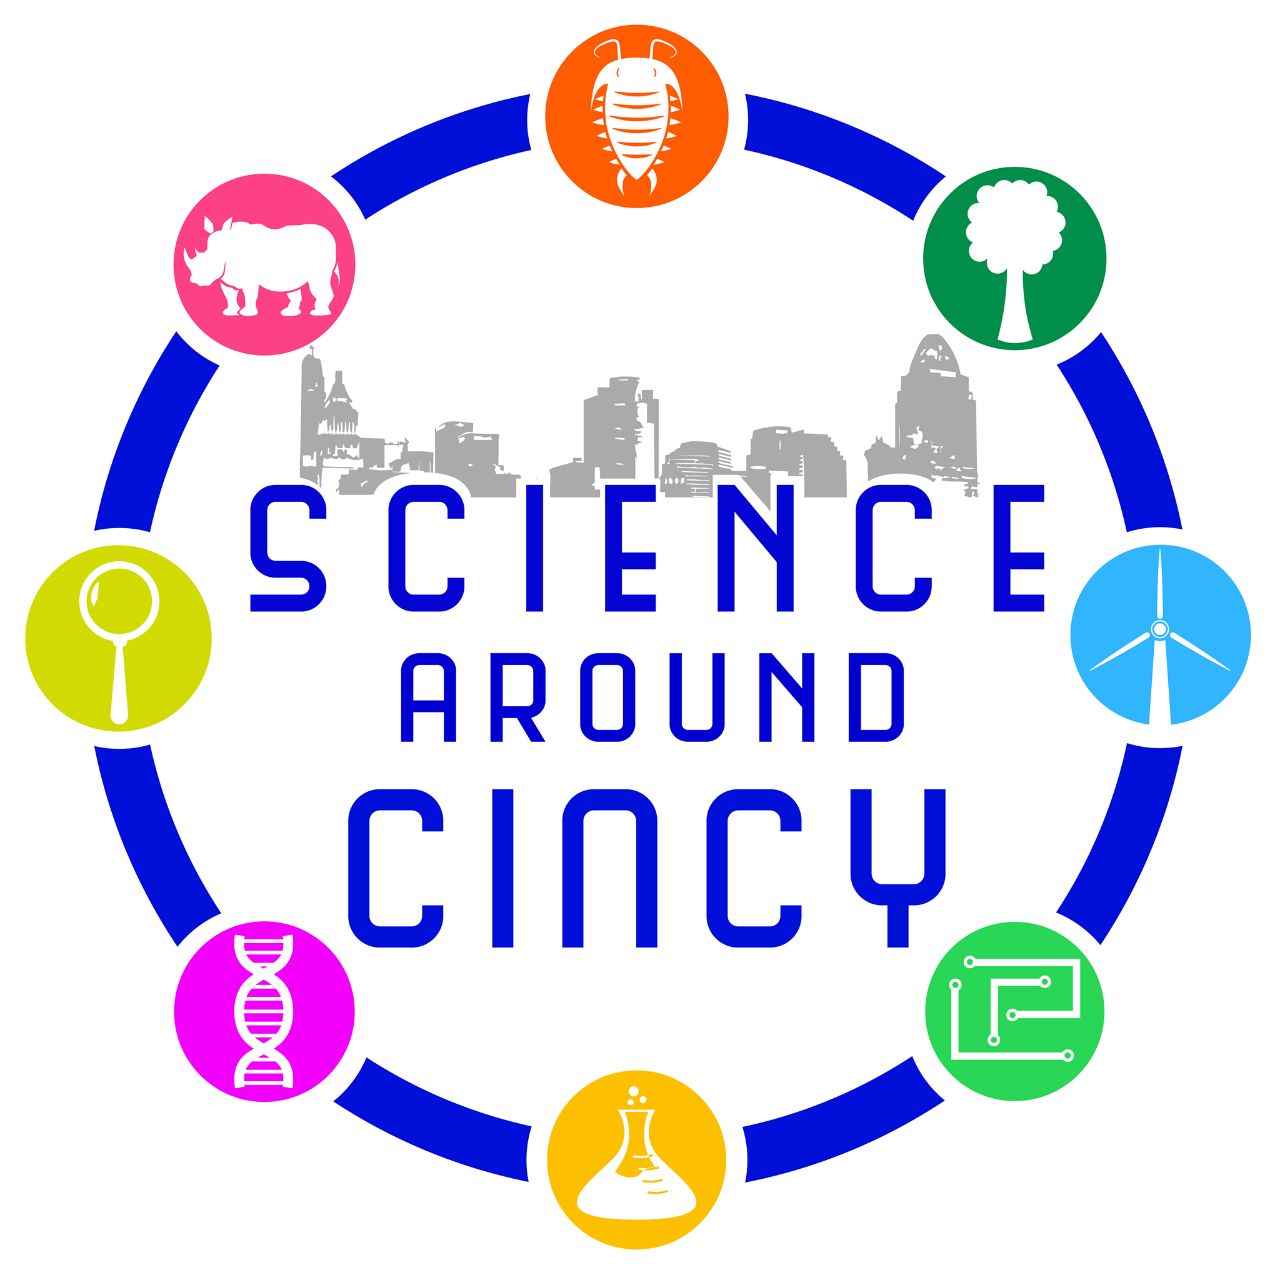 Science Around Cincy